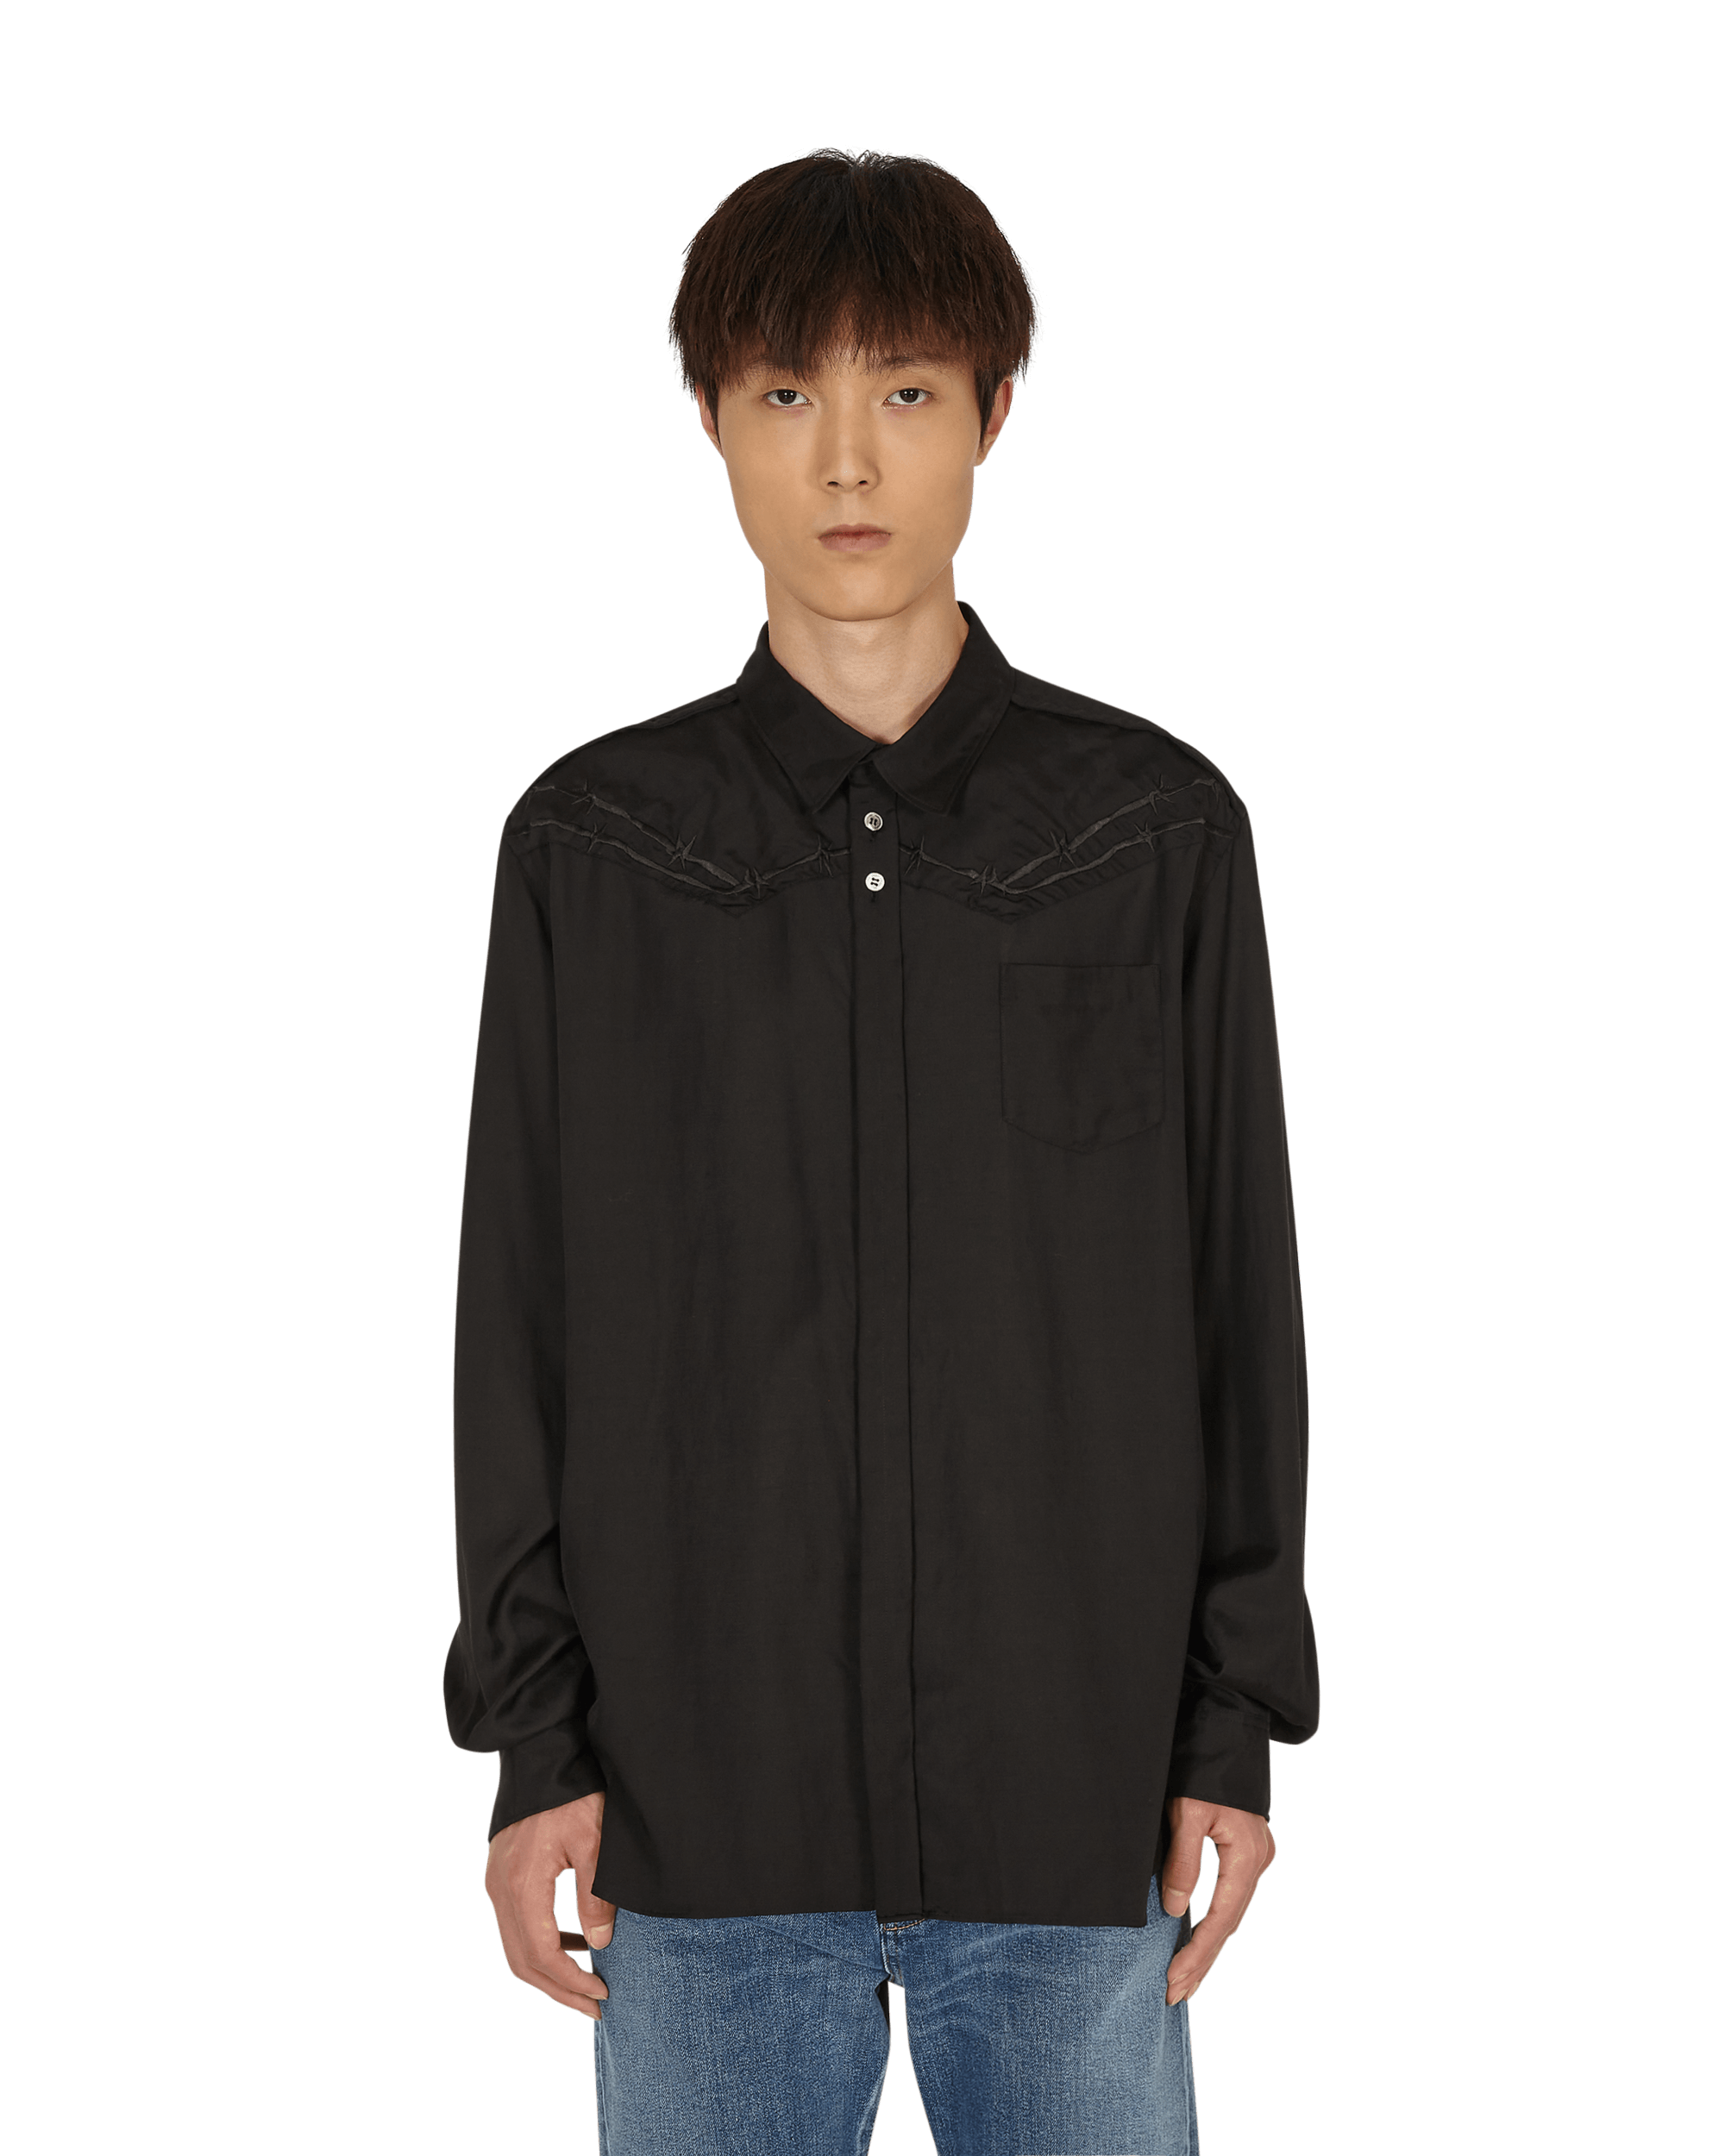 Undercover Shirt Black Shirts Longsleeve UC1A4404 BLACK